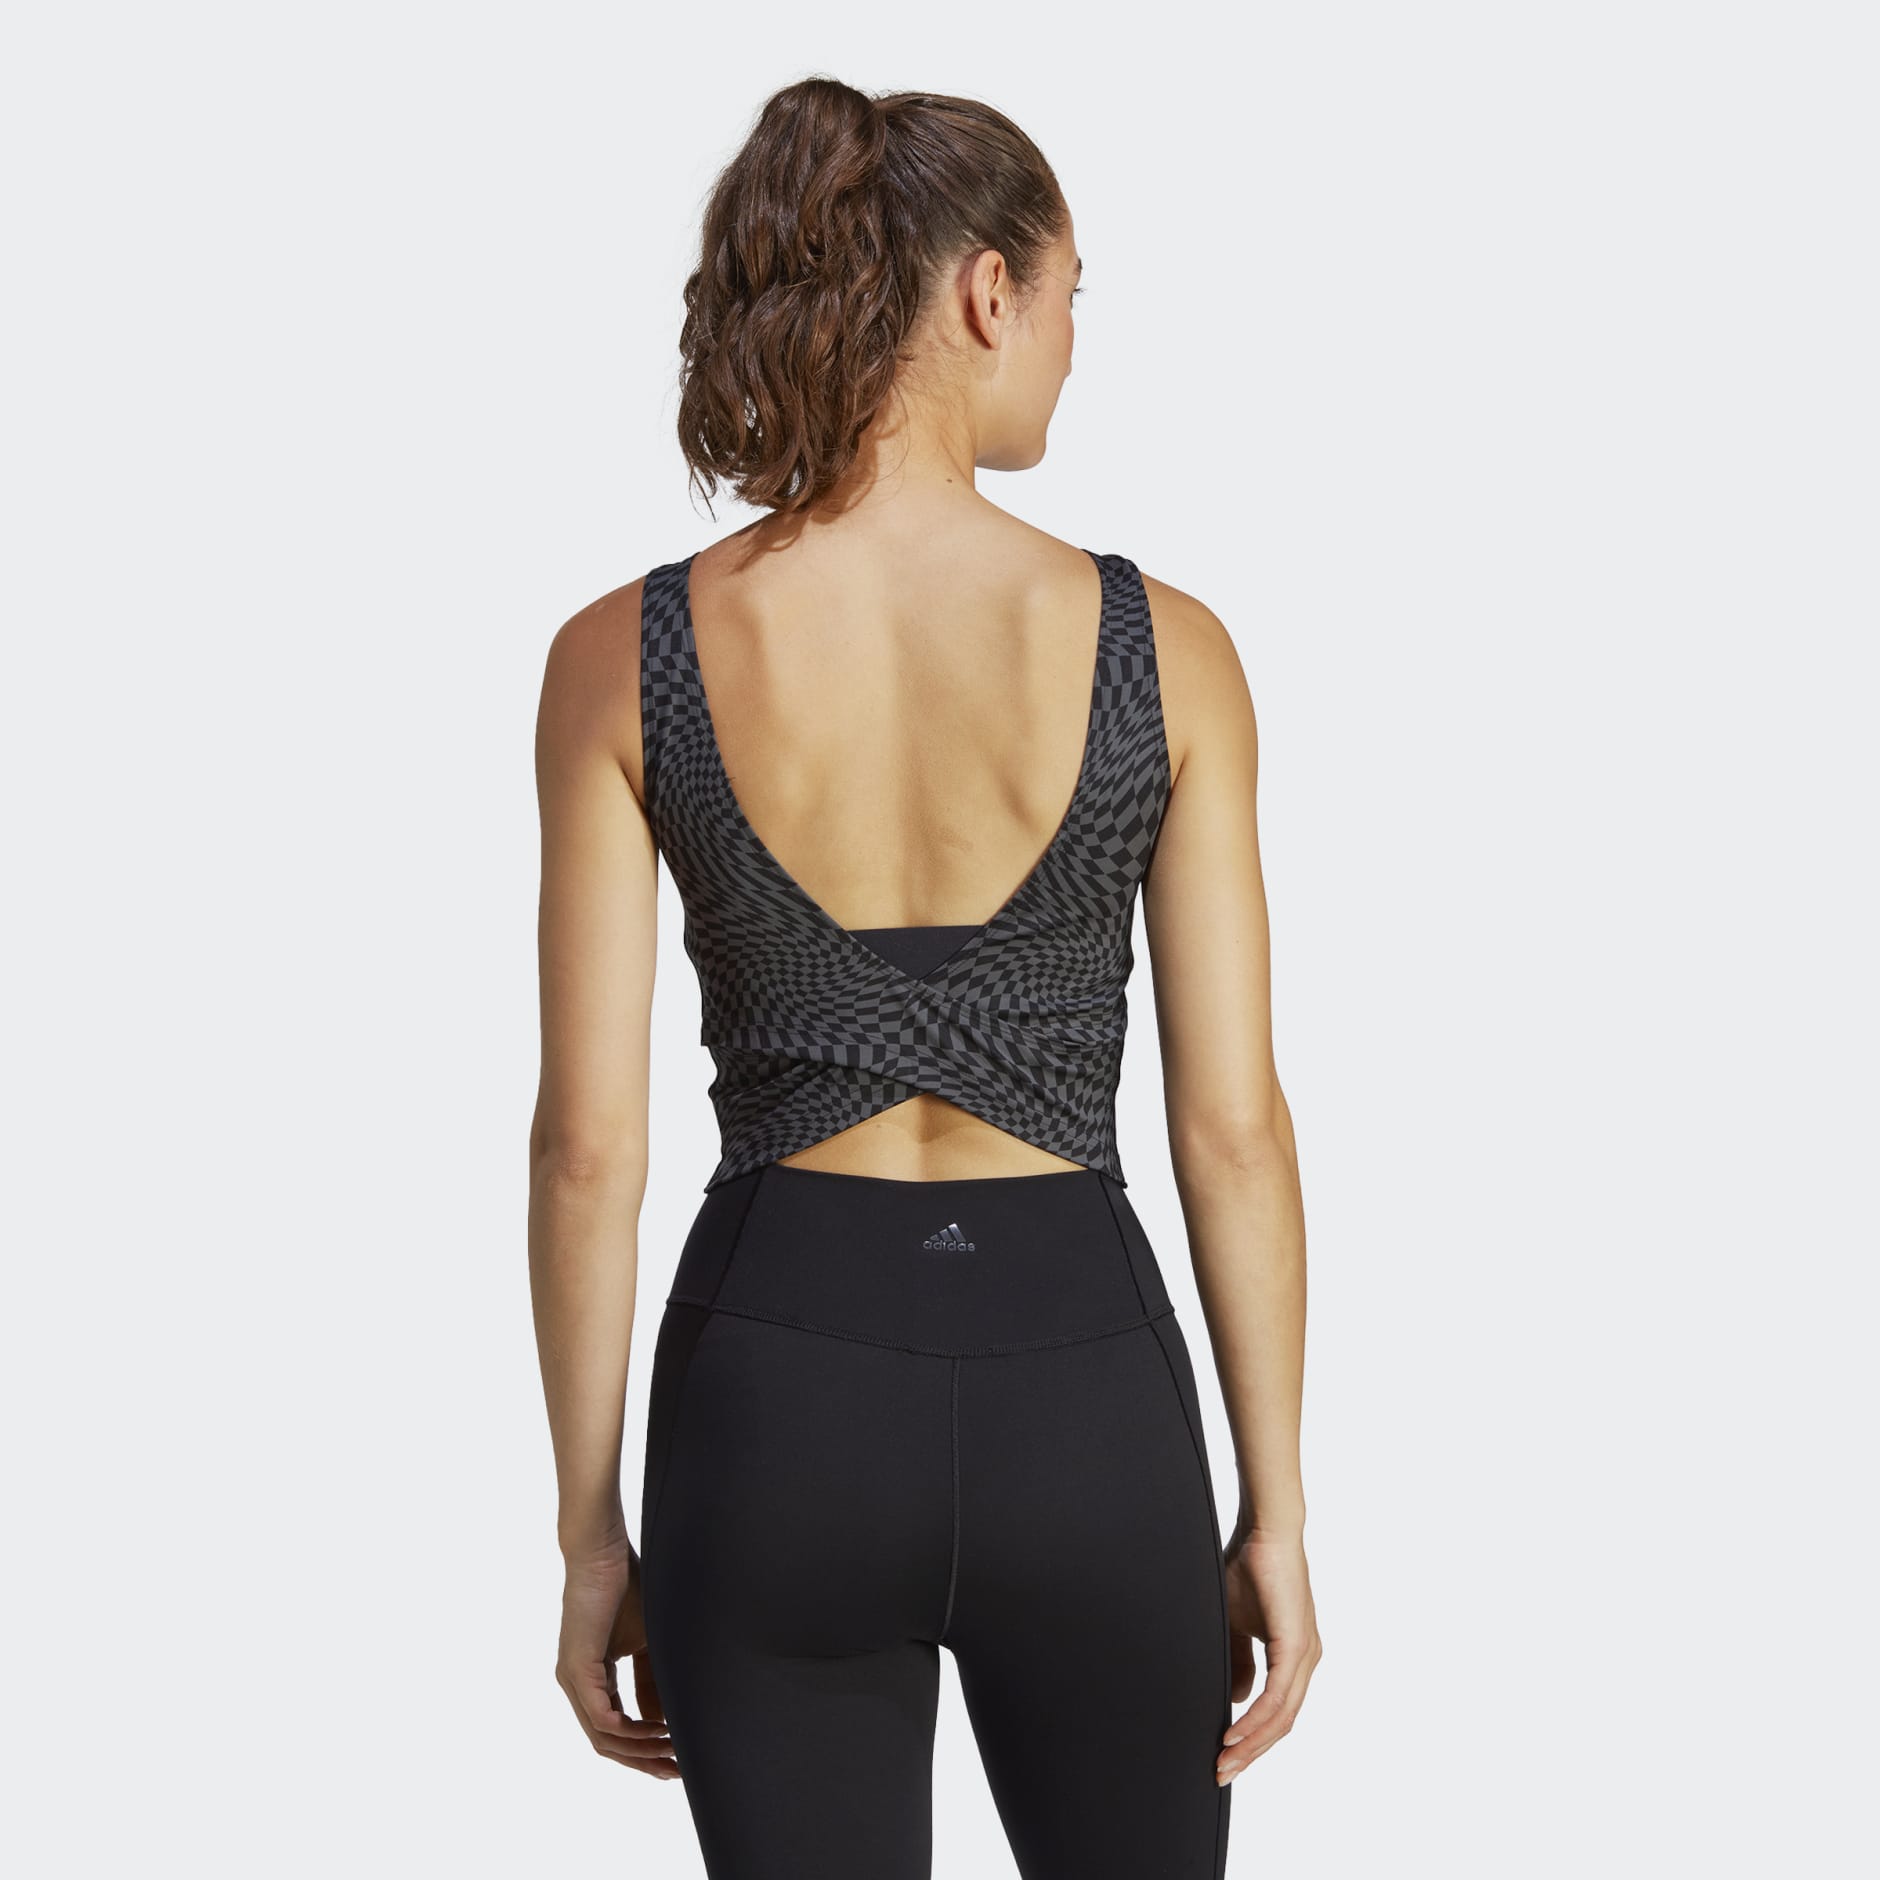 Women's Clothing - Print Clash Yoga Tank Top - Black